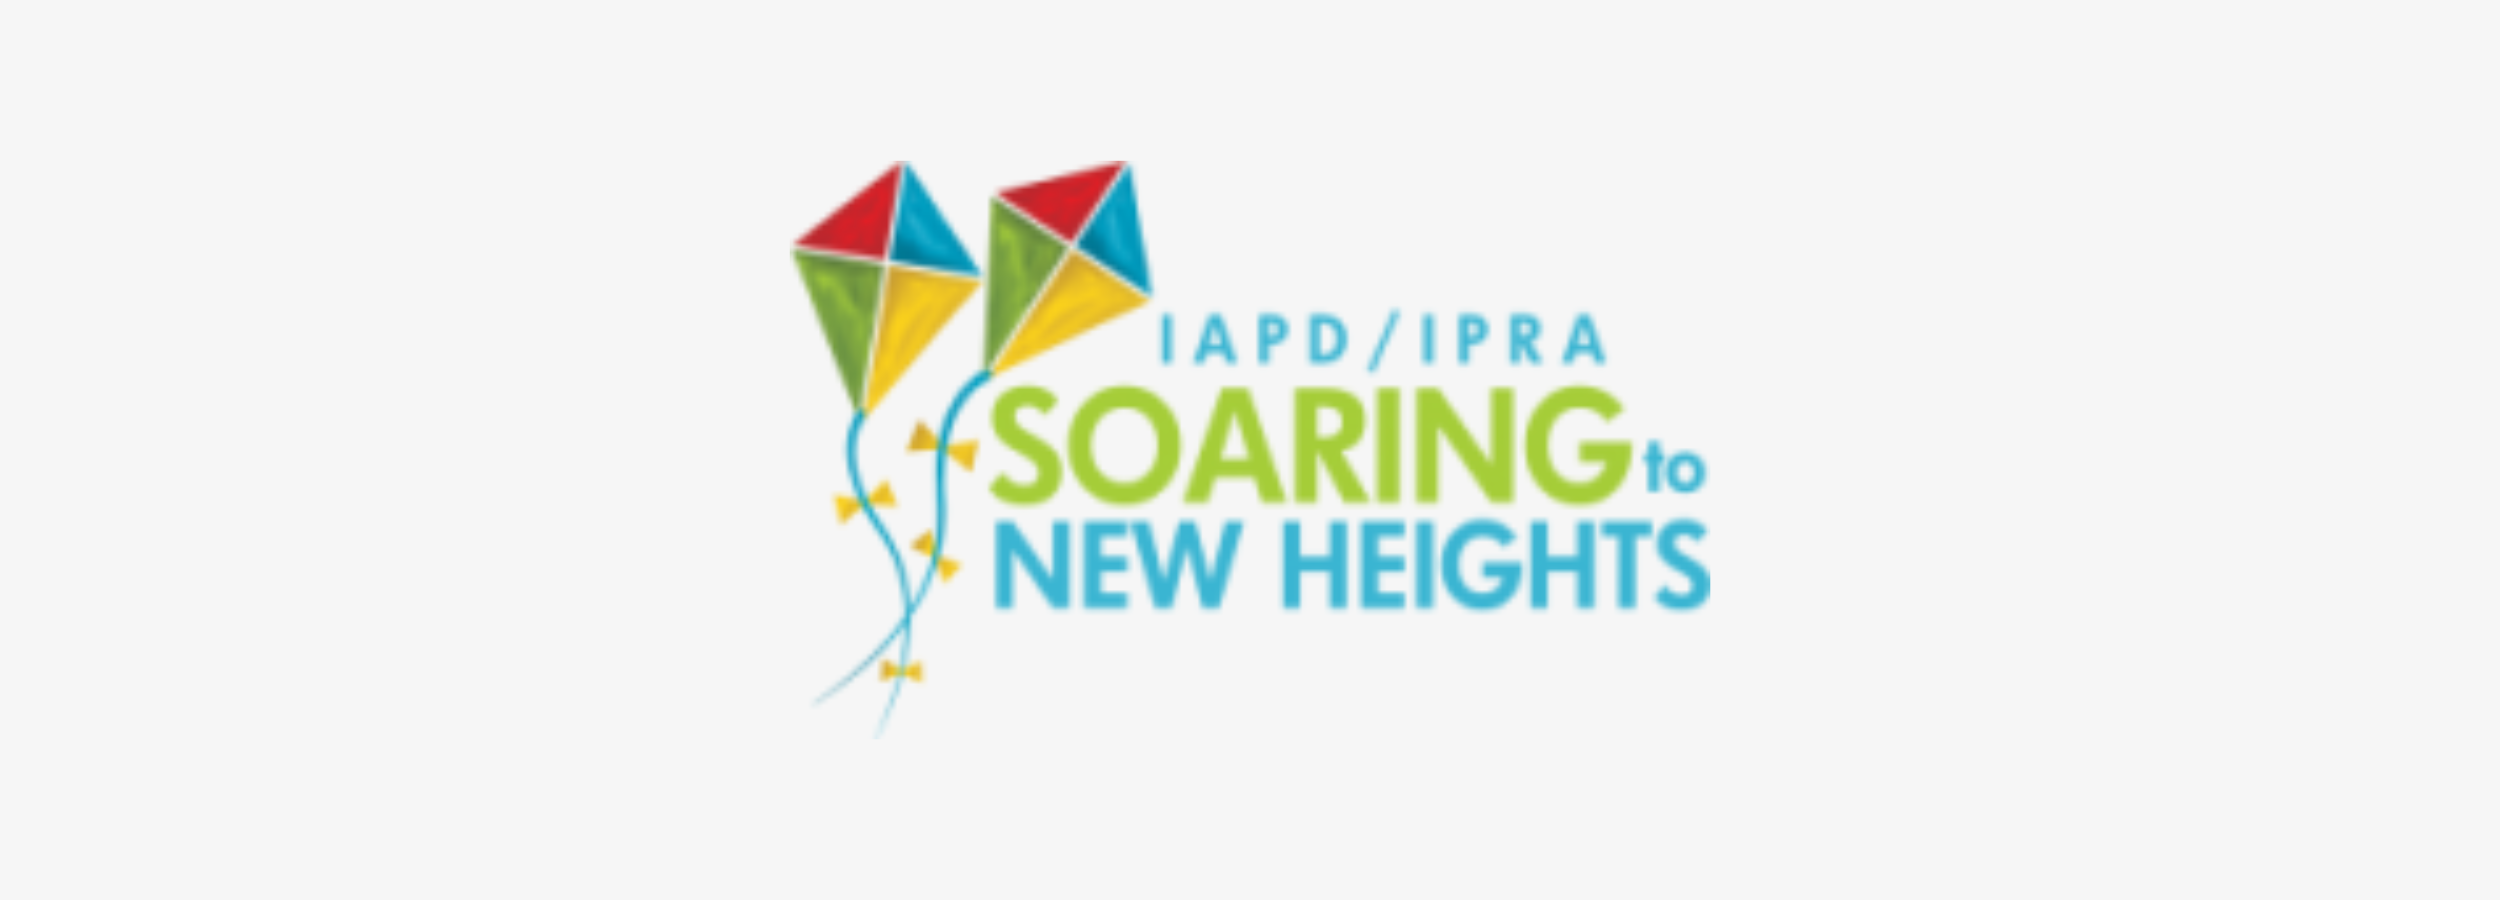 IAPD / IPRA